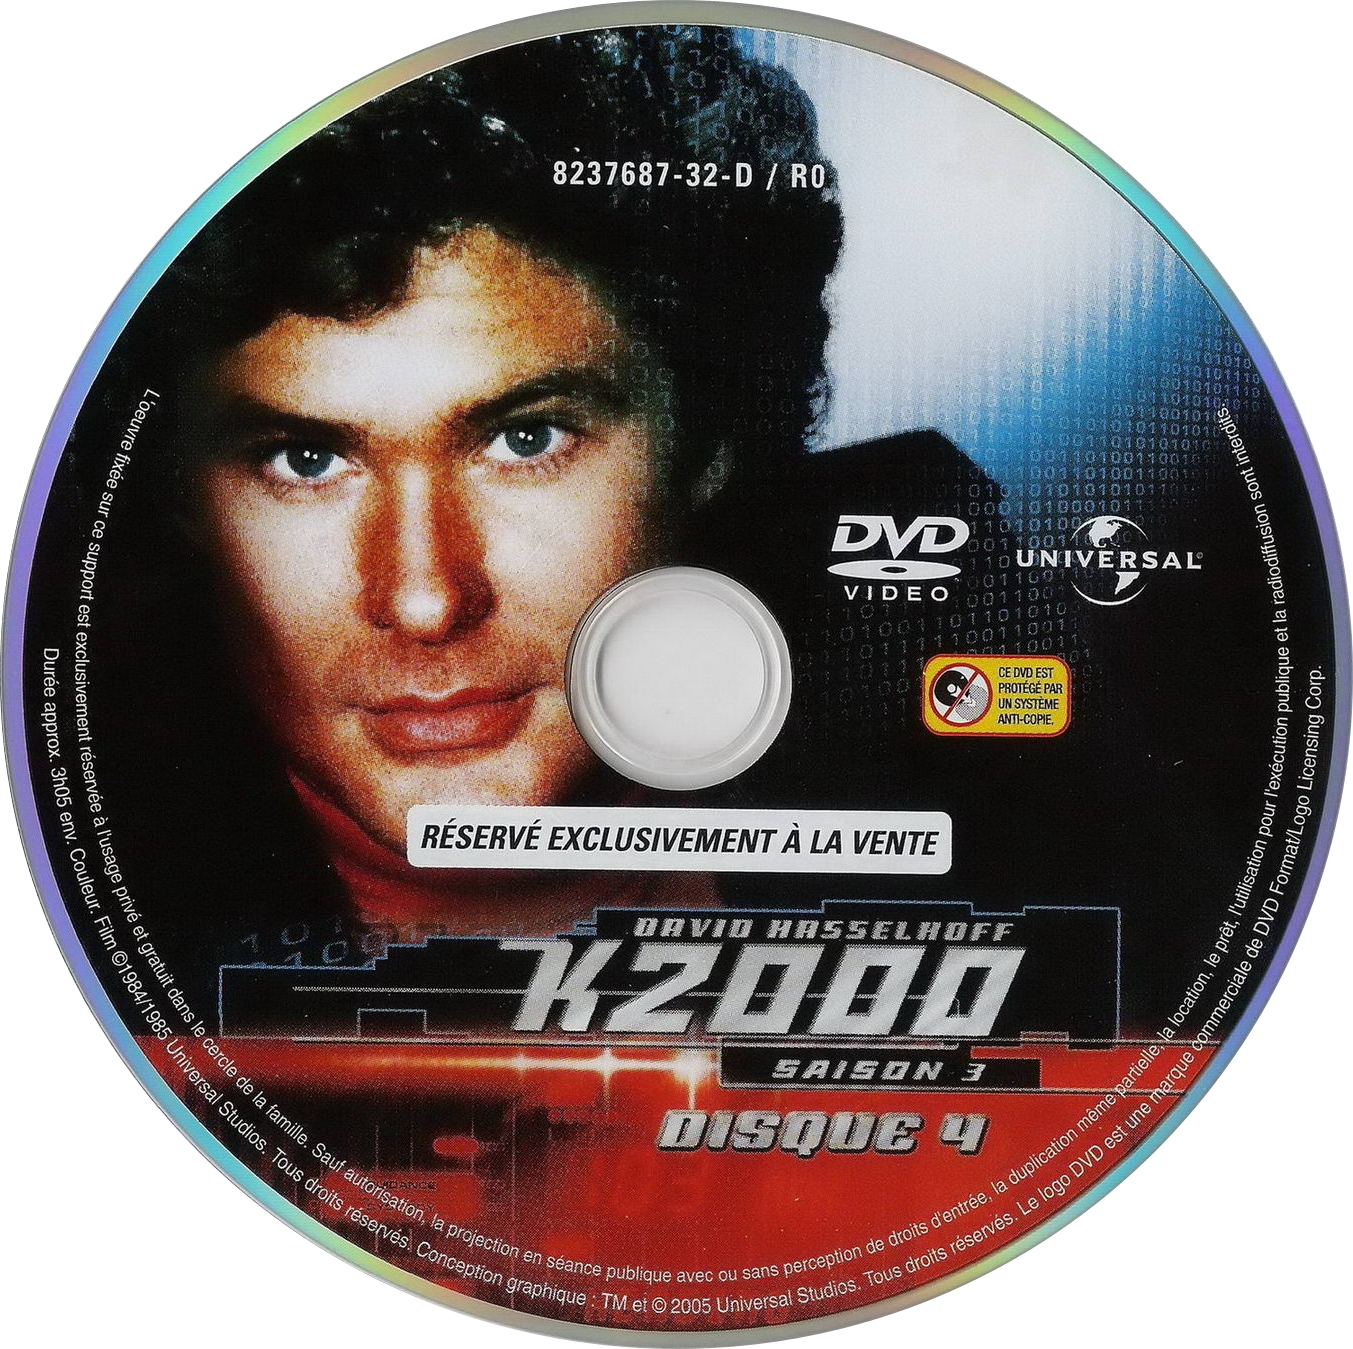 K2000 Saison 3 dvd 4